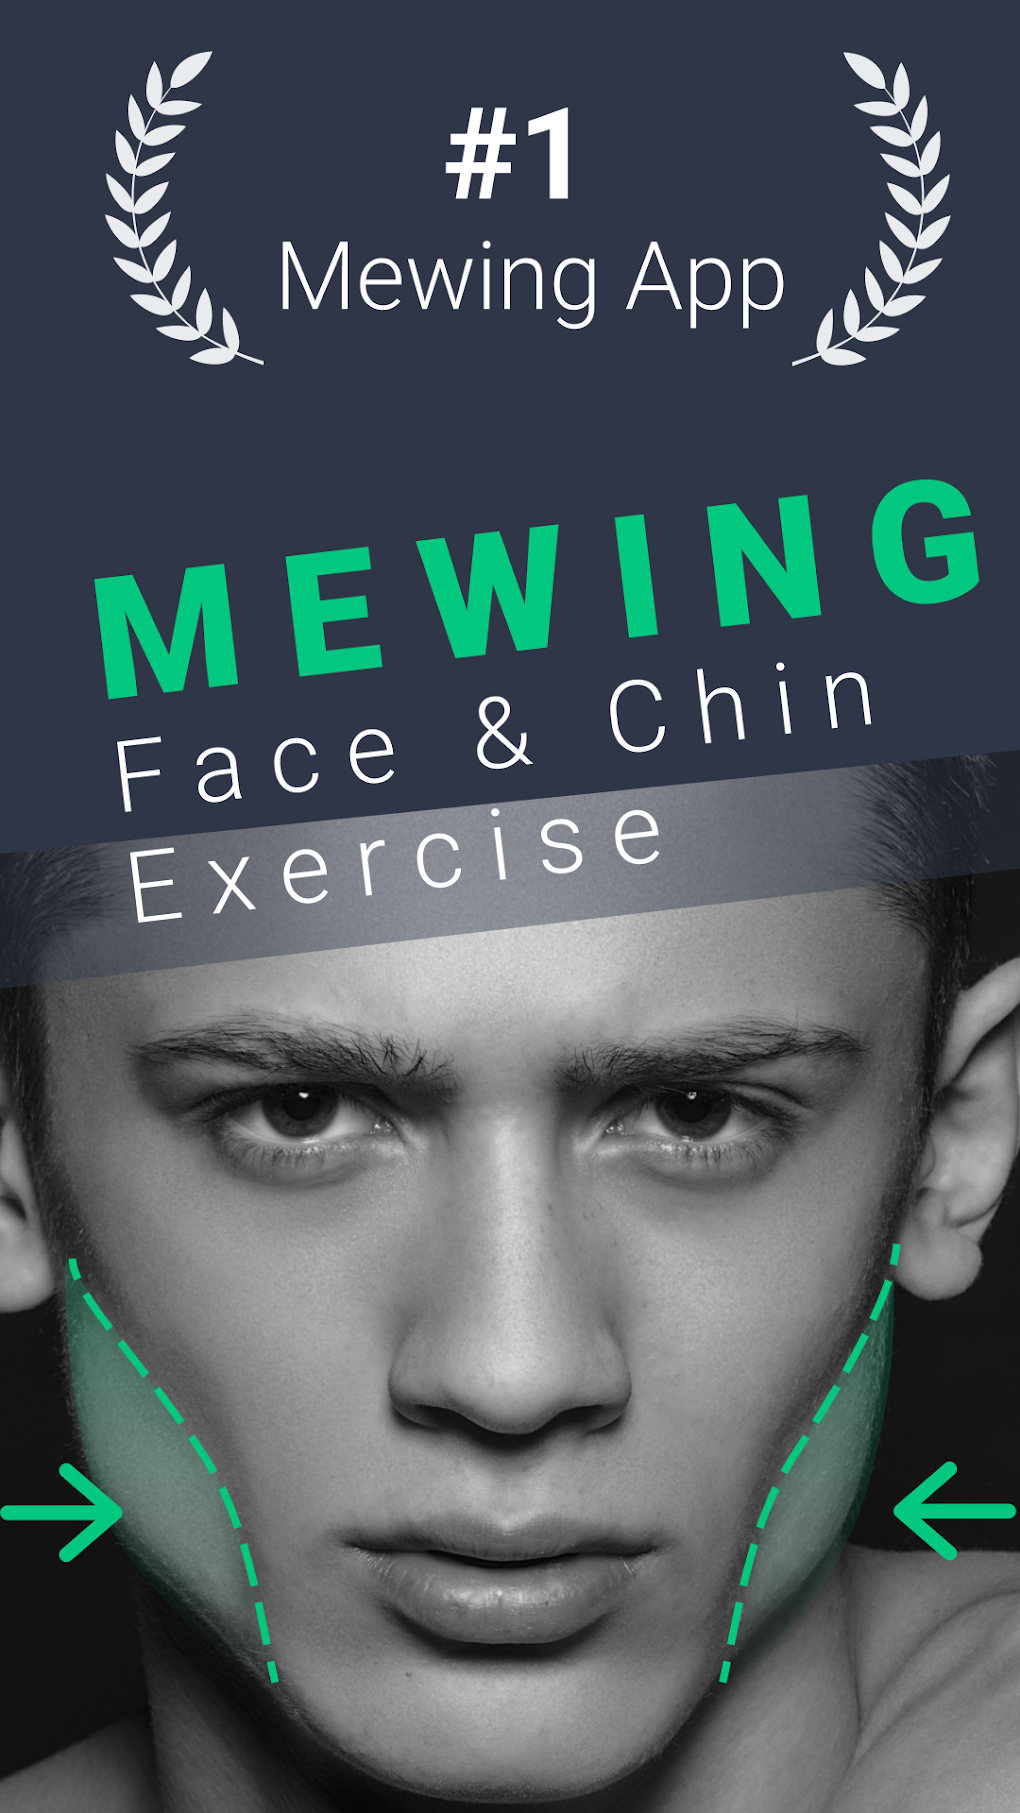 JAWINNER, Uma prática popular chamada Mewing